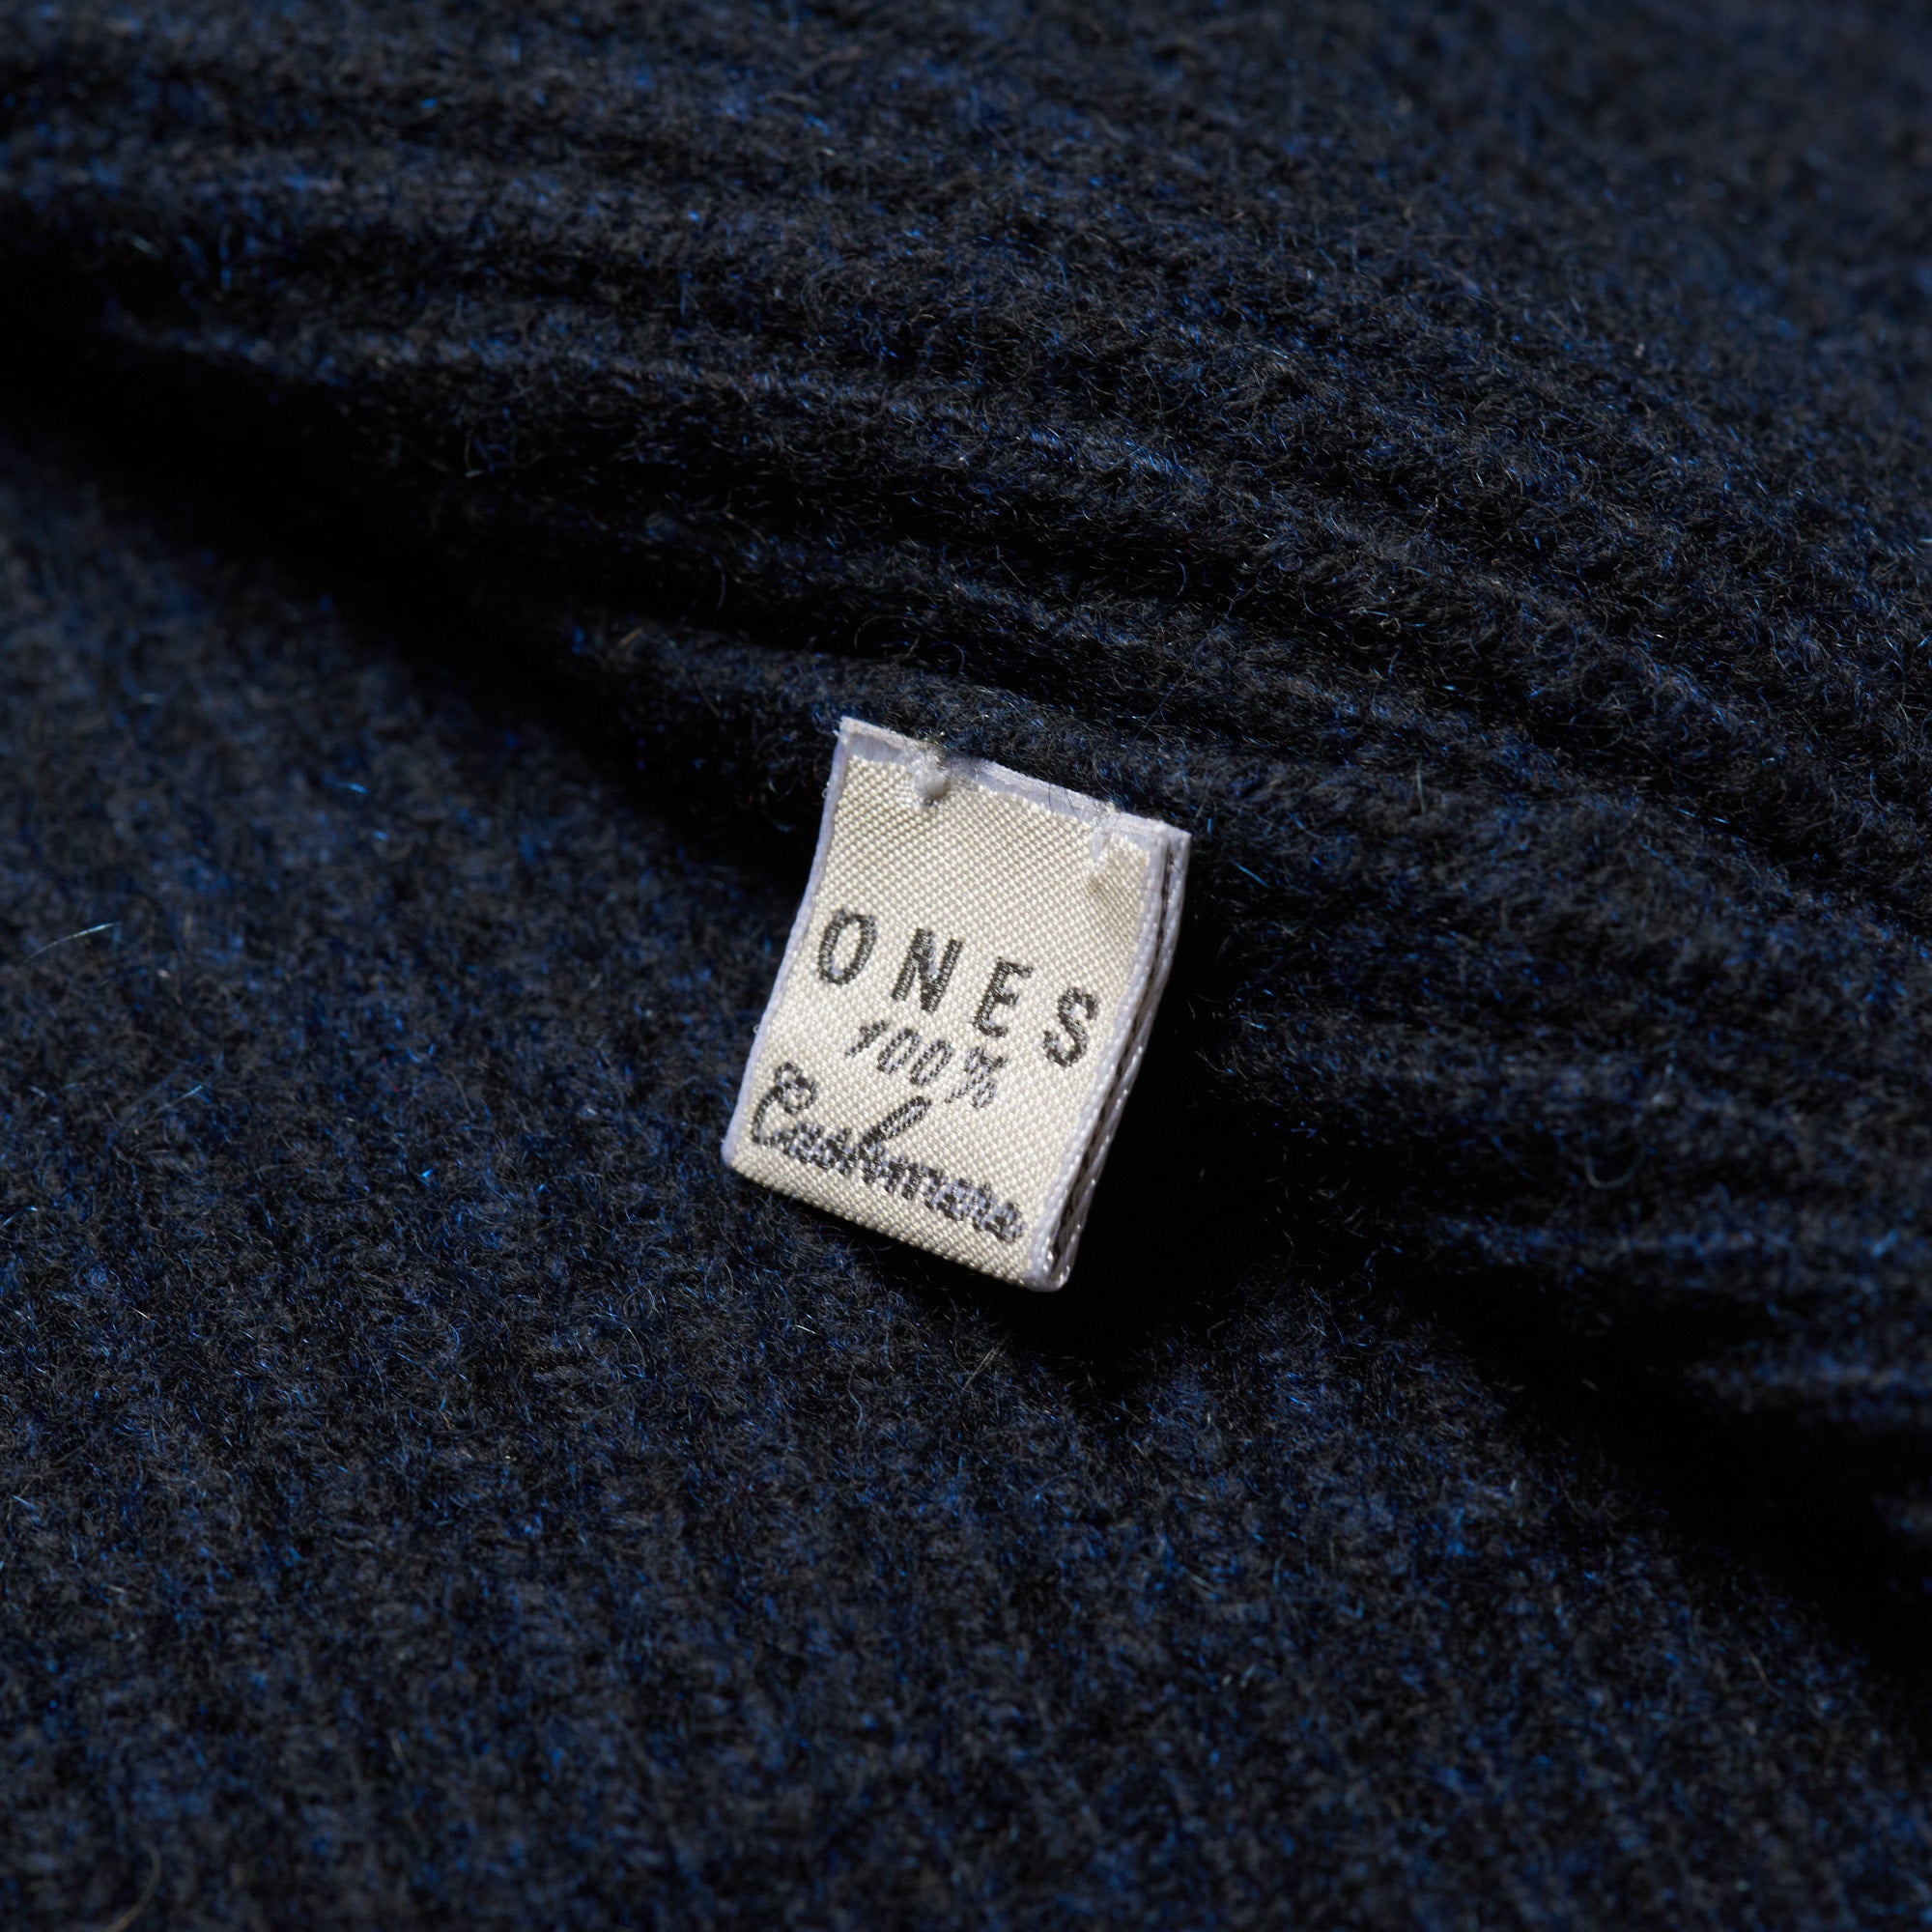 ONES Navy Blue Cashmere Knit Dual Zip Cardigan Sweater EU 50 NEW US M ONES